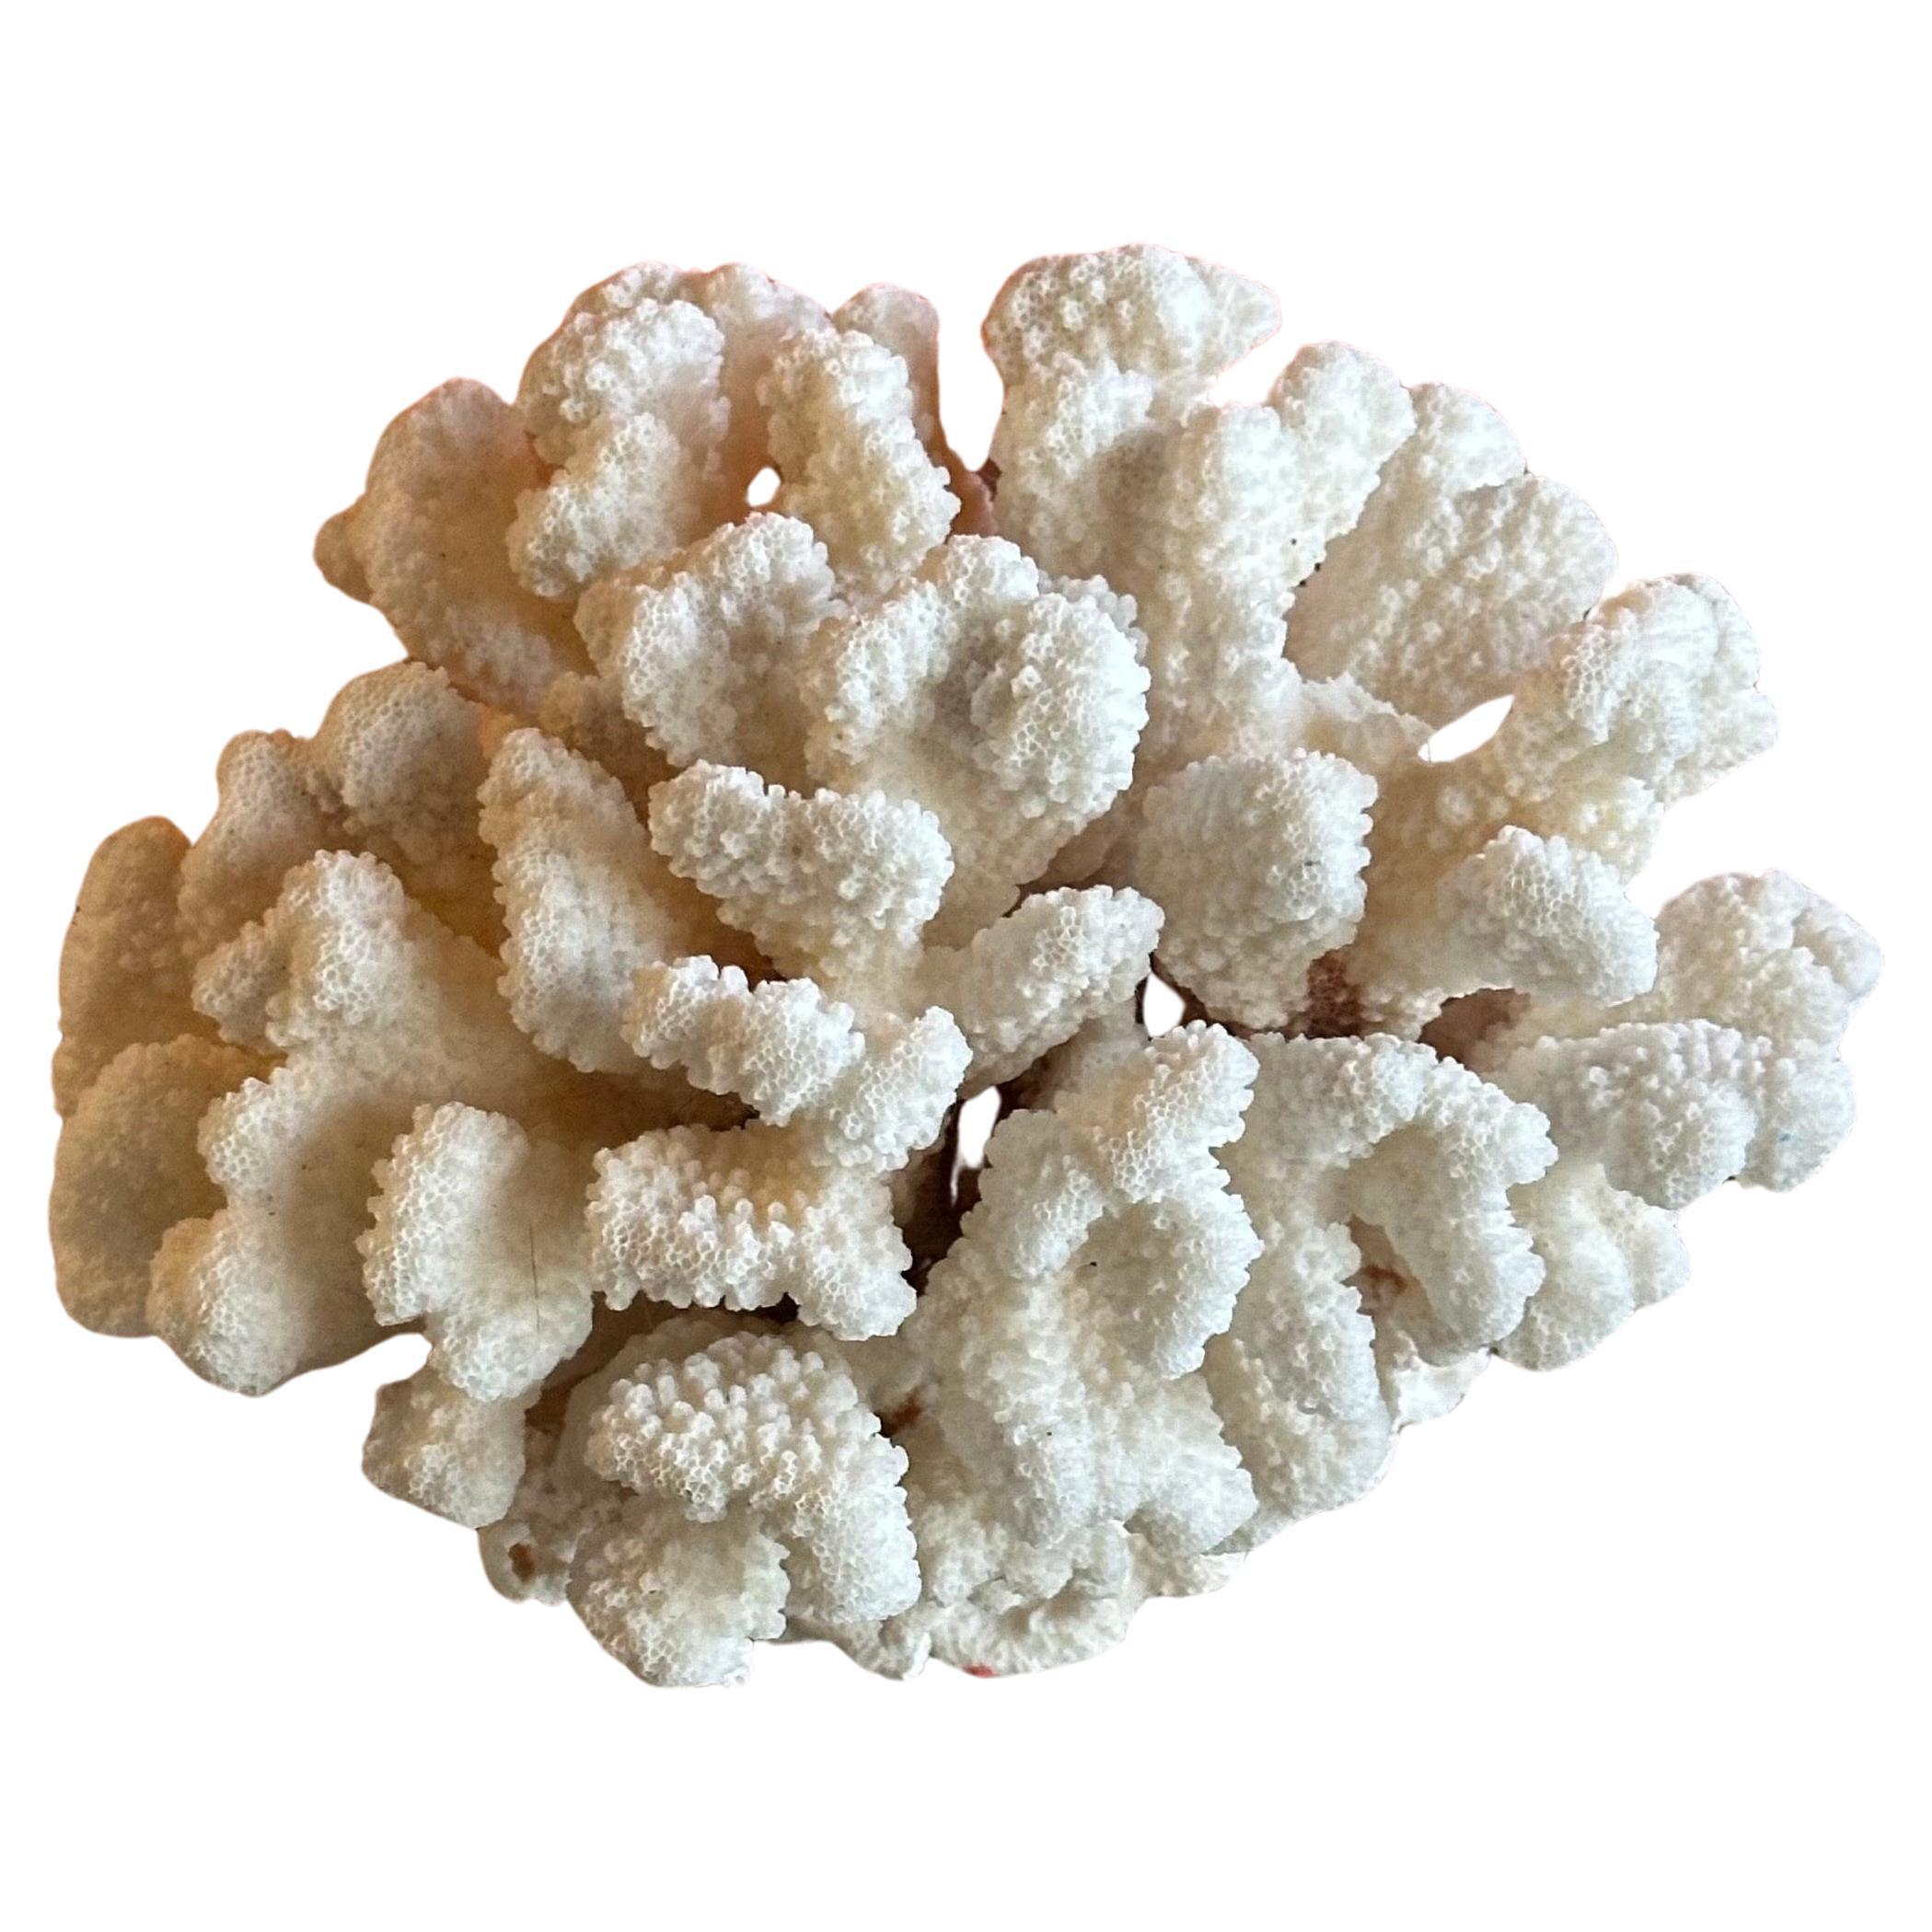 Großes natürliches weißes Meereskorallen-Exemplar